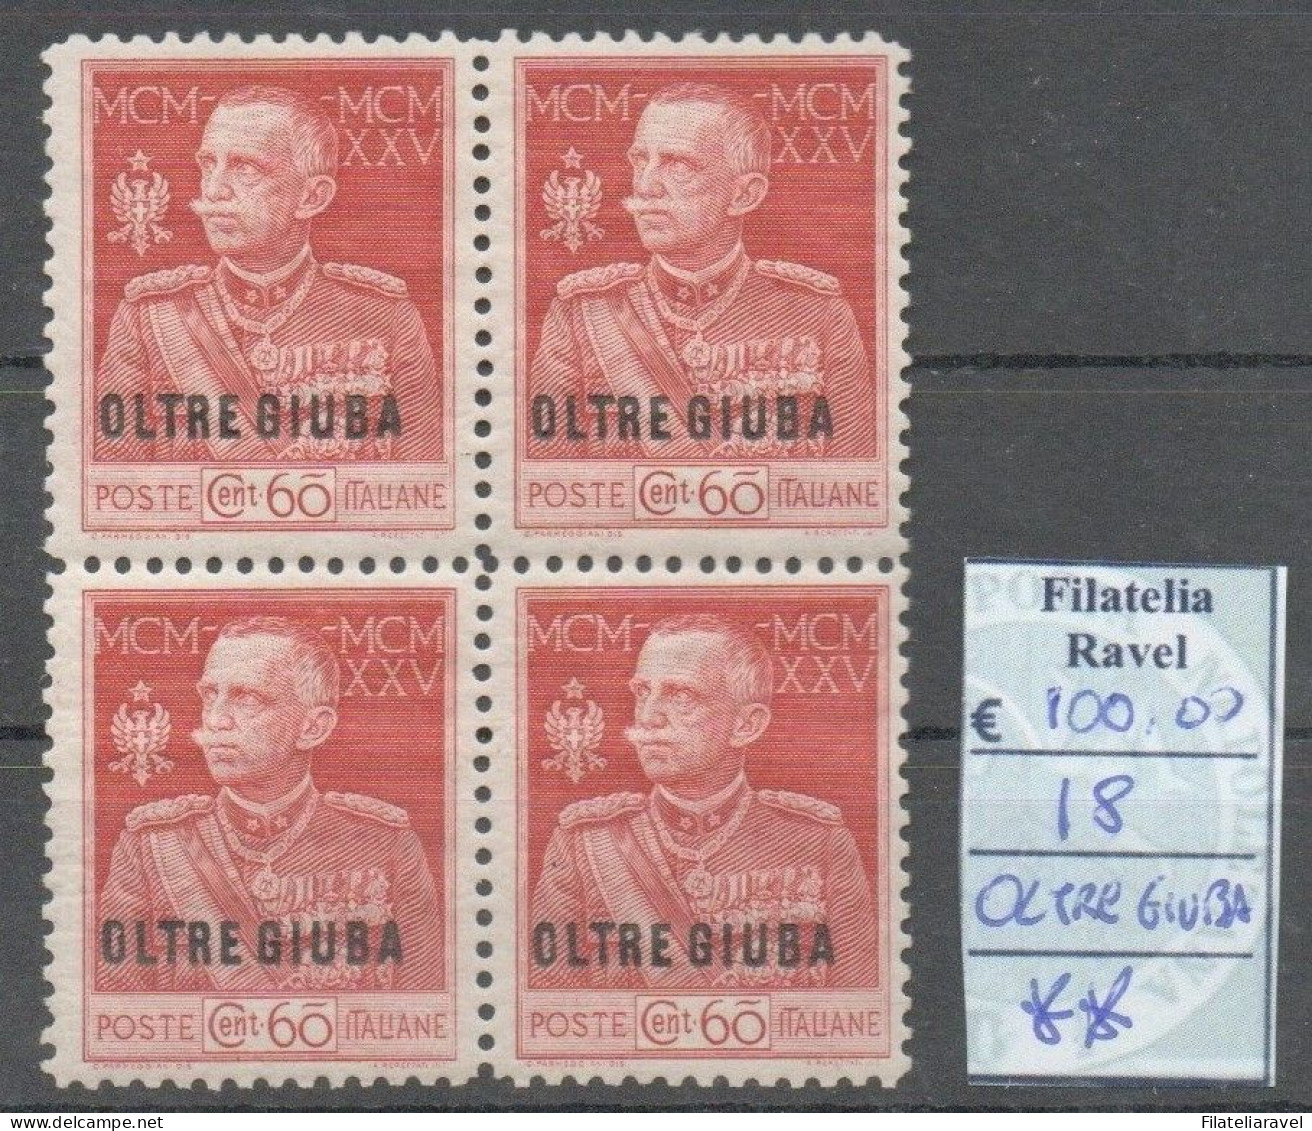 COLONIE ITALIANE - OLTRE GIUBA 1925  "Giubileo Del Re" Valore Da 60 Cent, Dent 11 Quartina Integra Catalogo N. 18 - Oltre Giuba